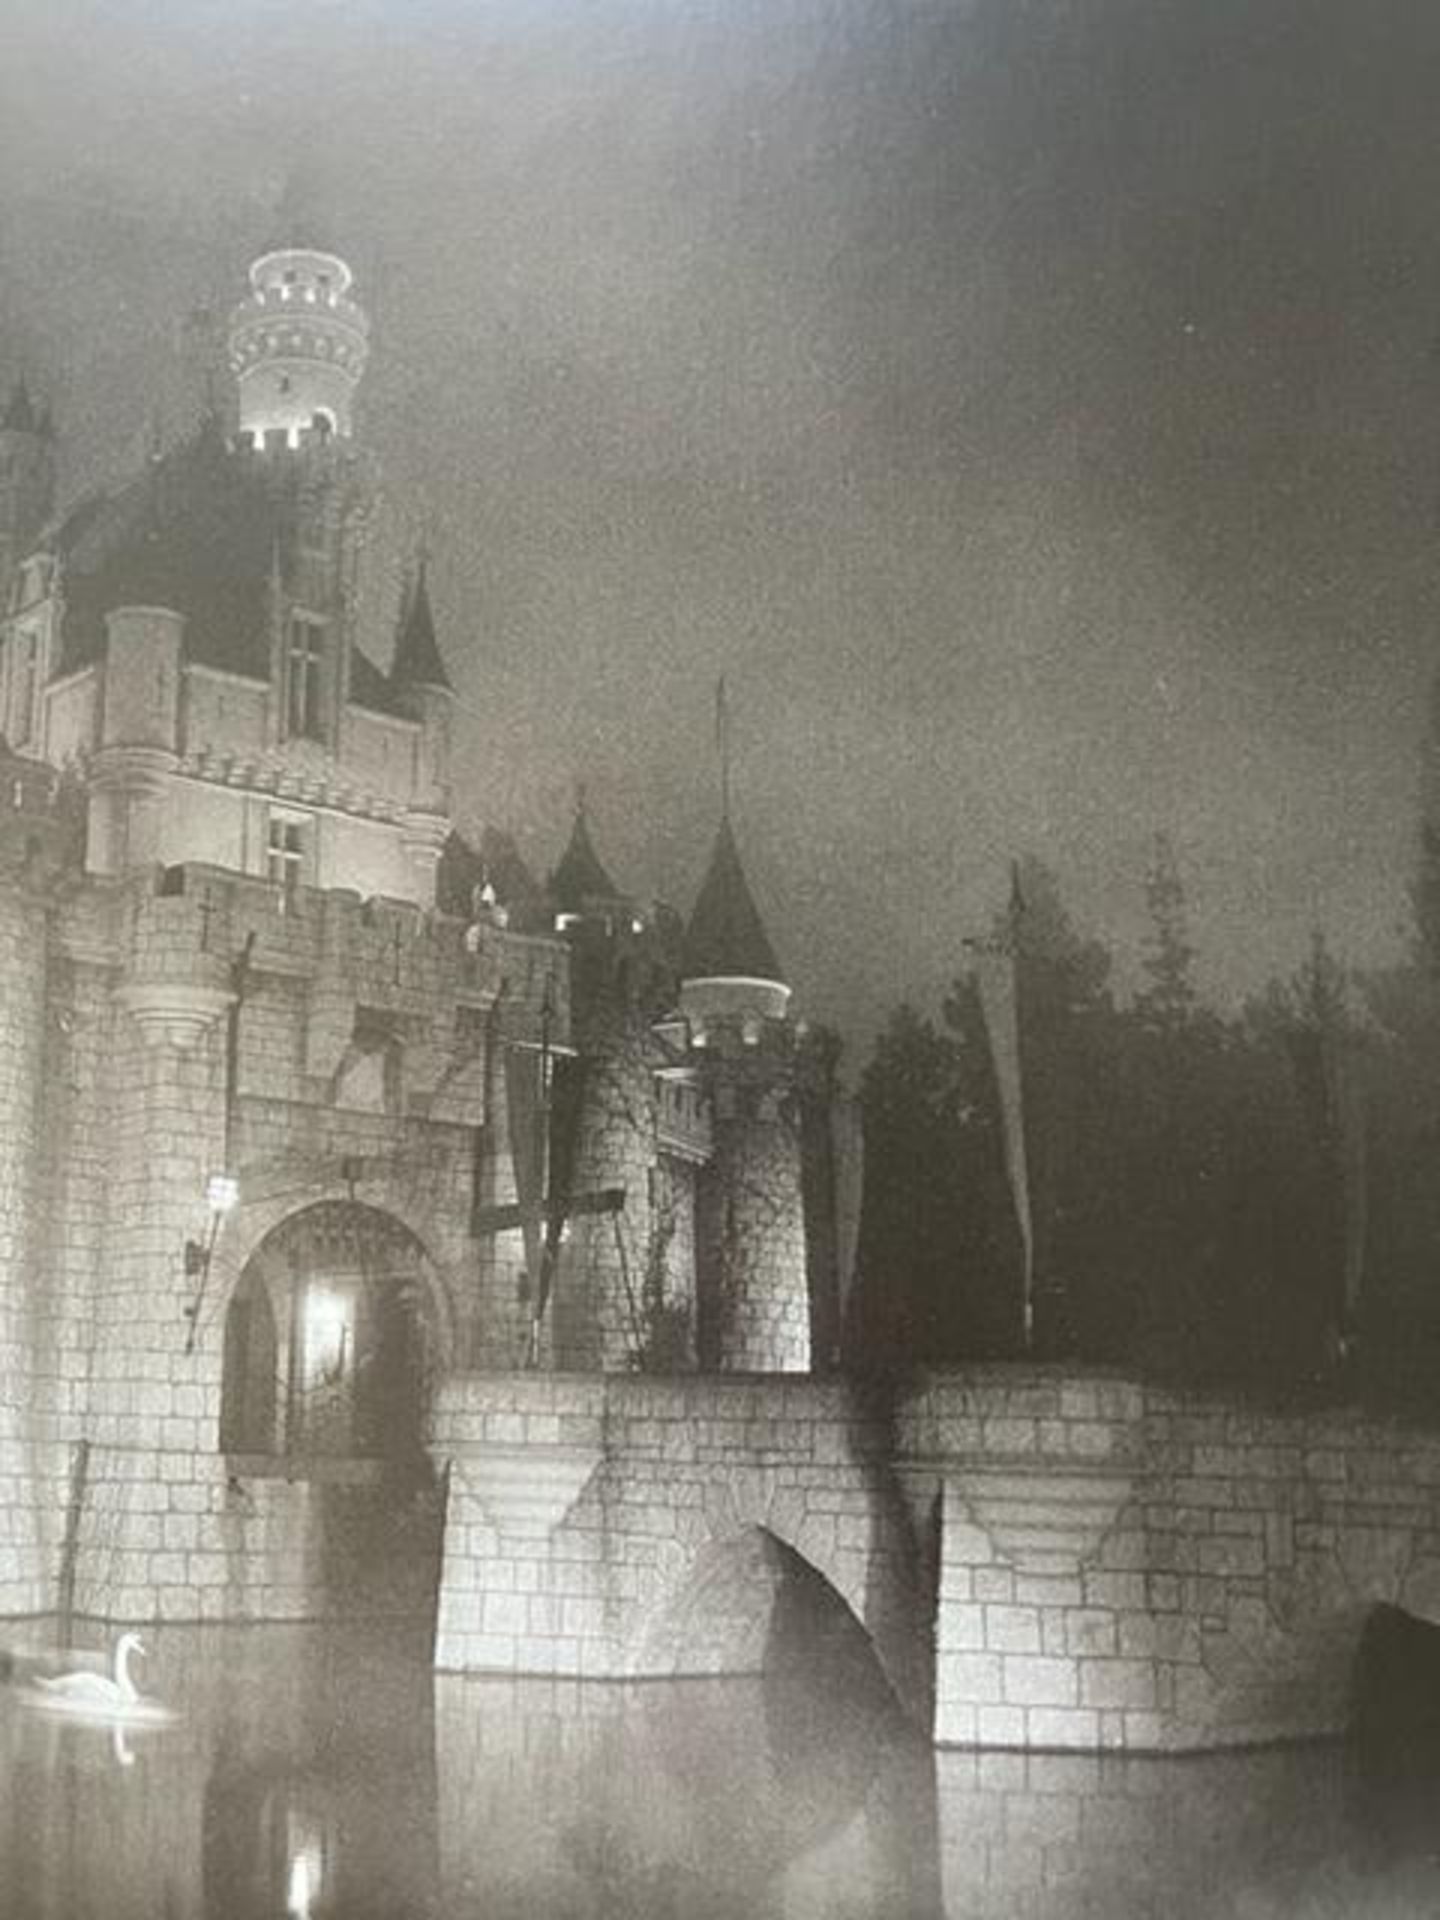 Diane Arbus "A castle in Disneyland" Print. - Image 2 of 6